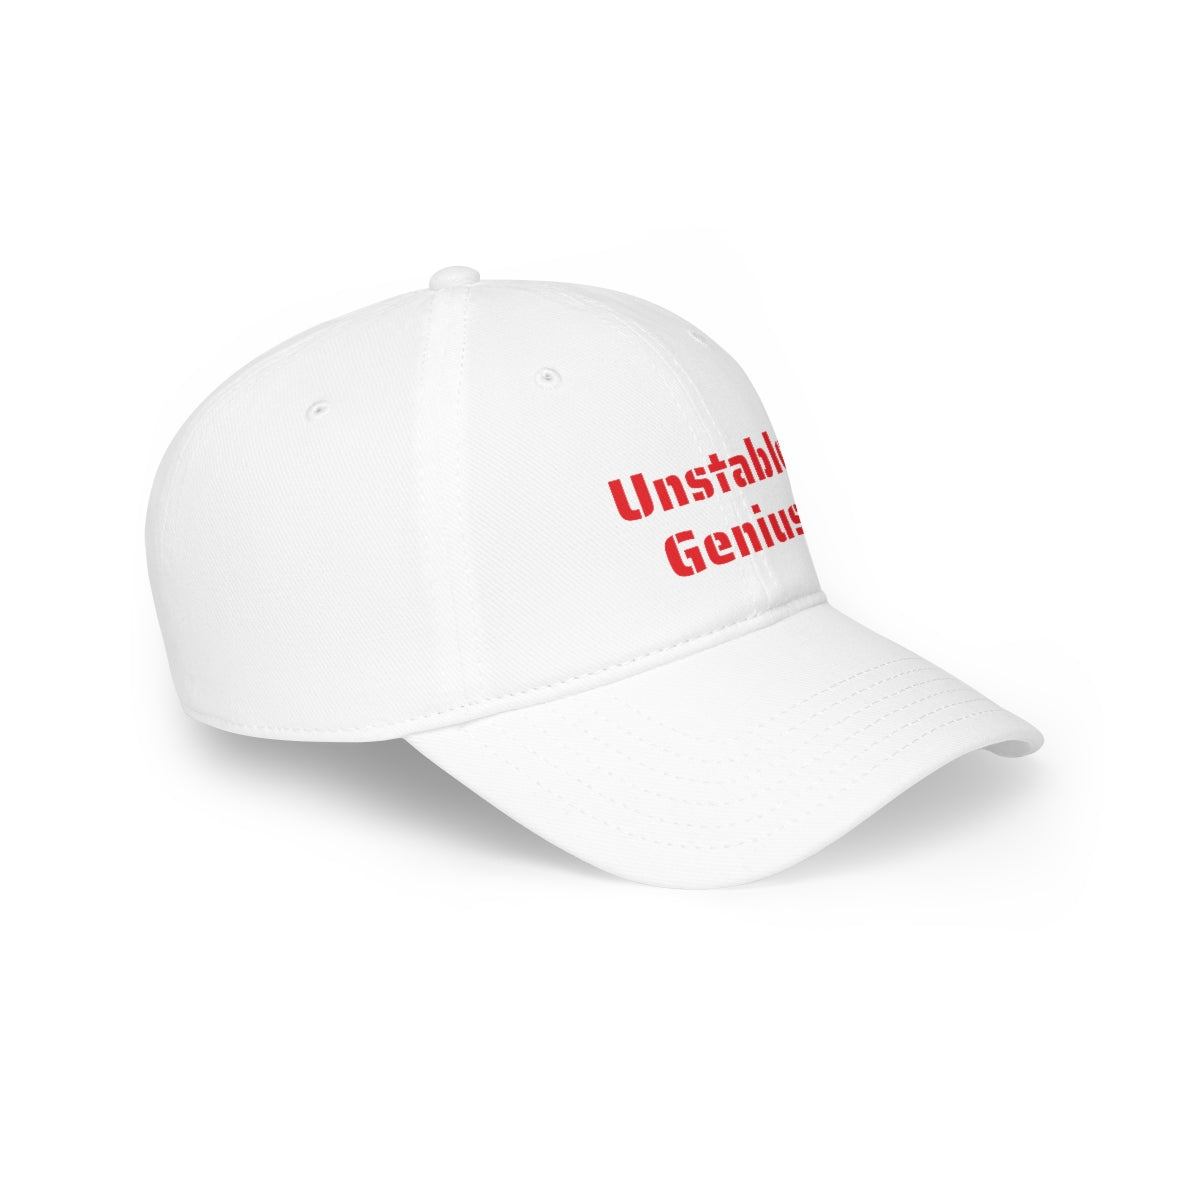 Unstable Genius - Low Profile Baseball Cap